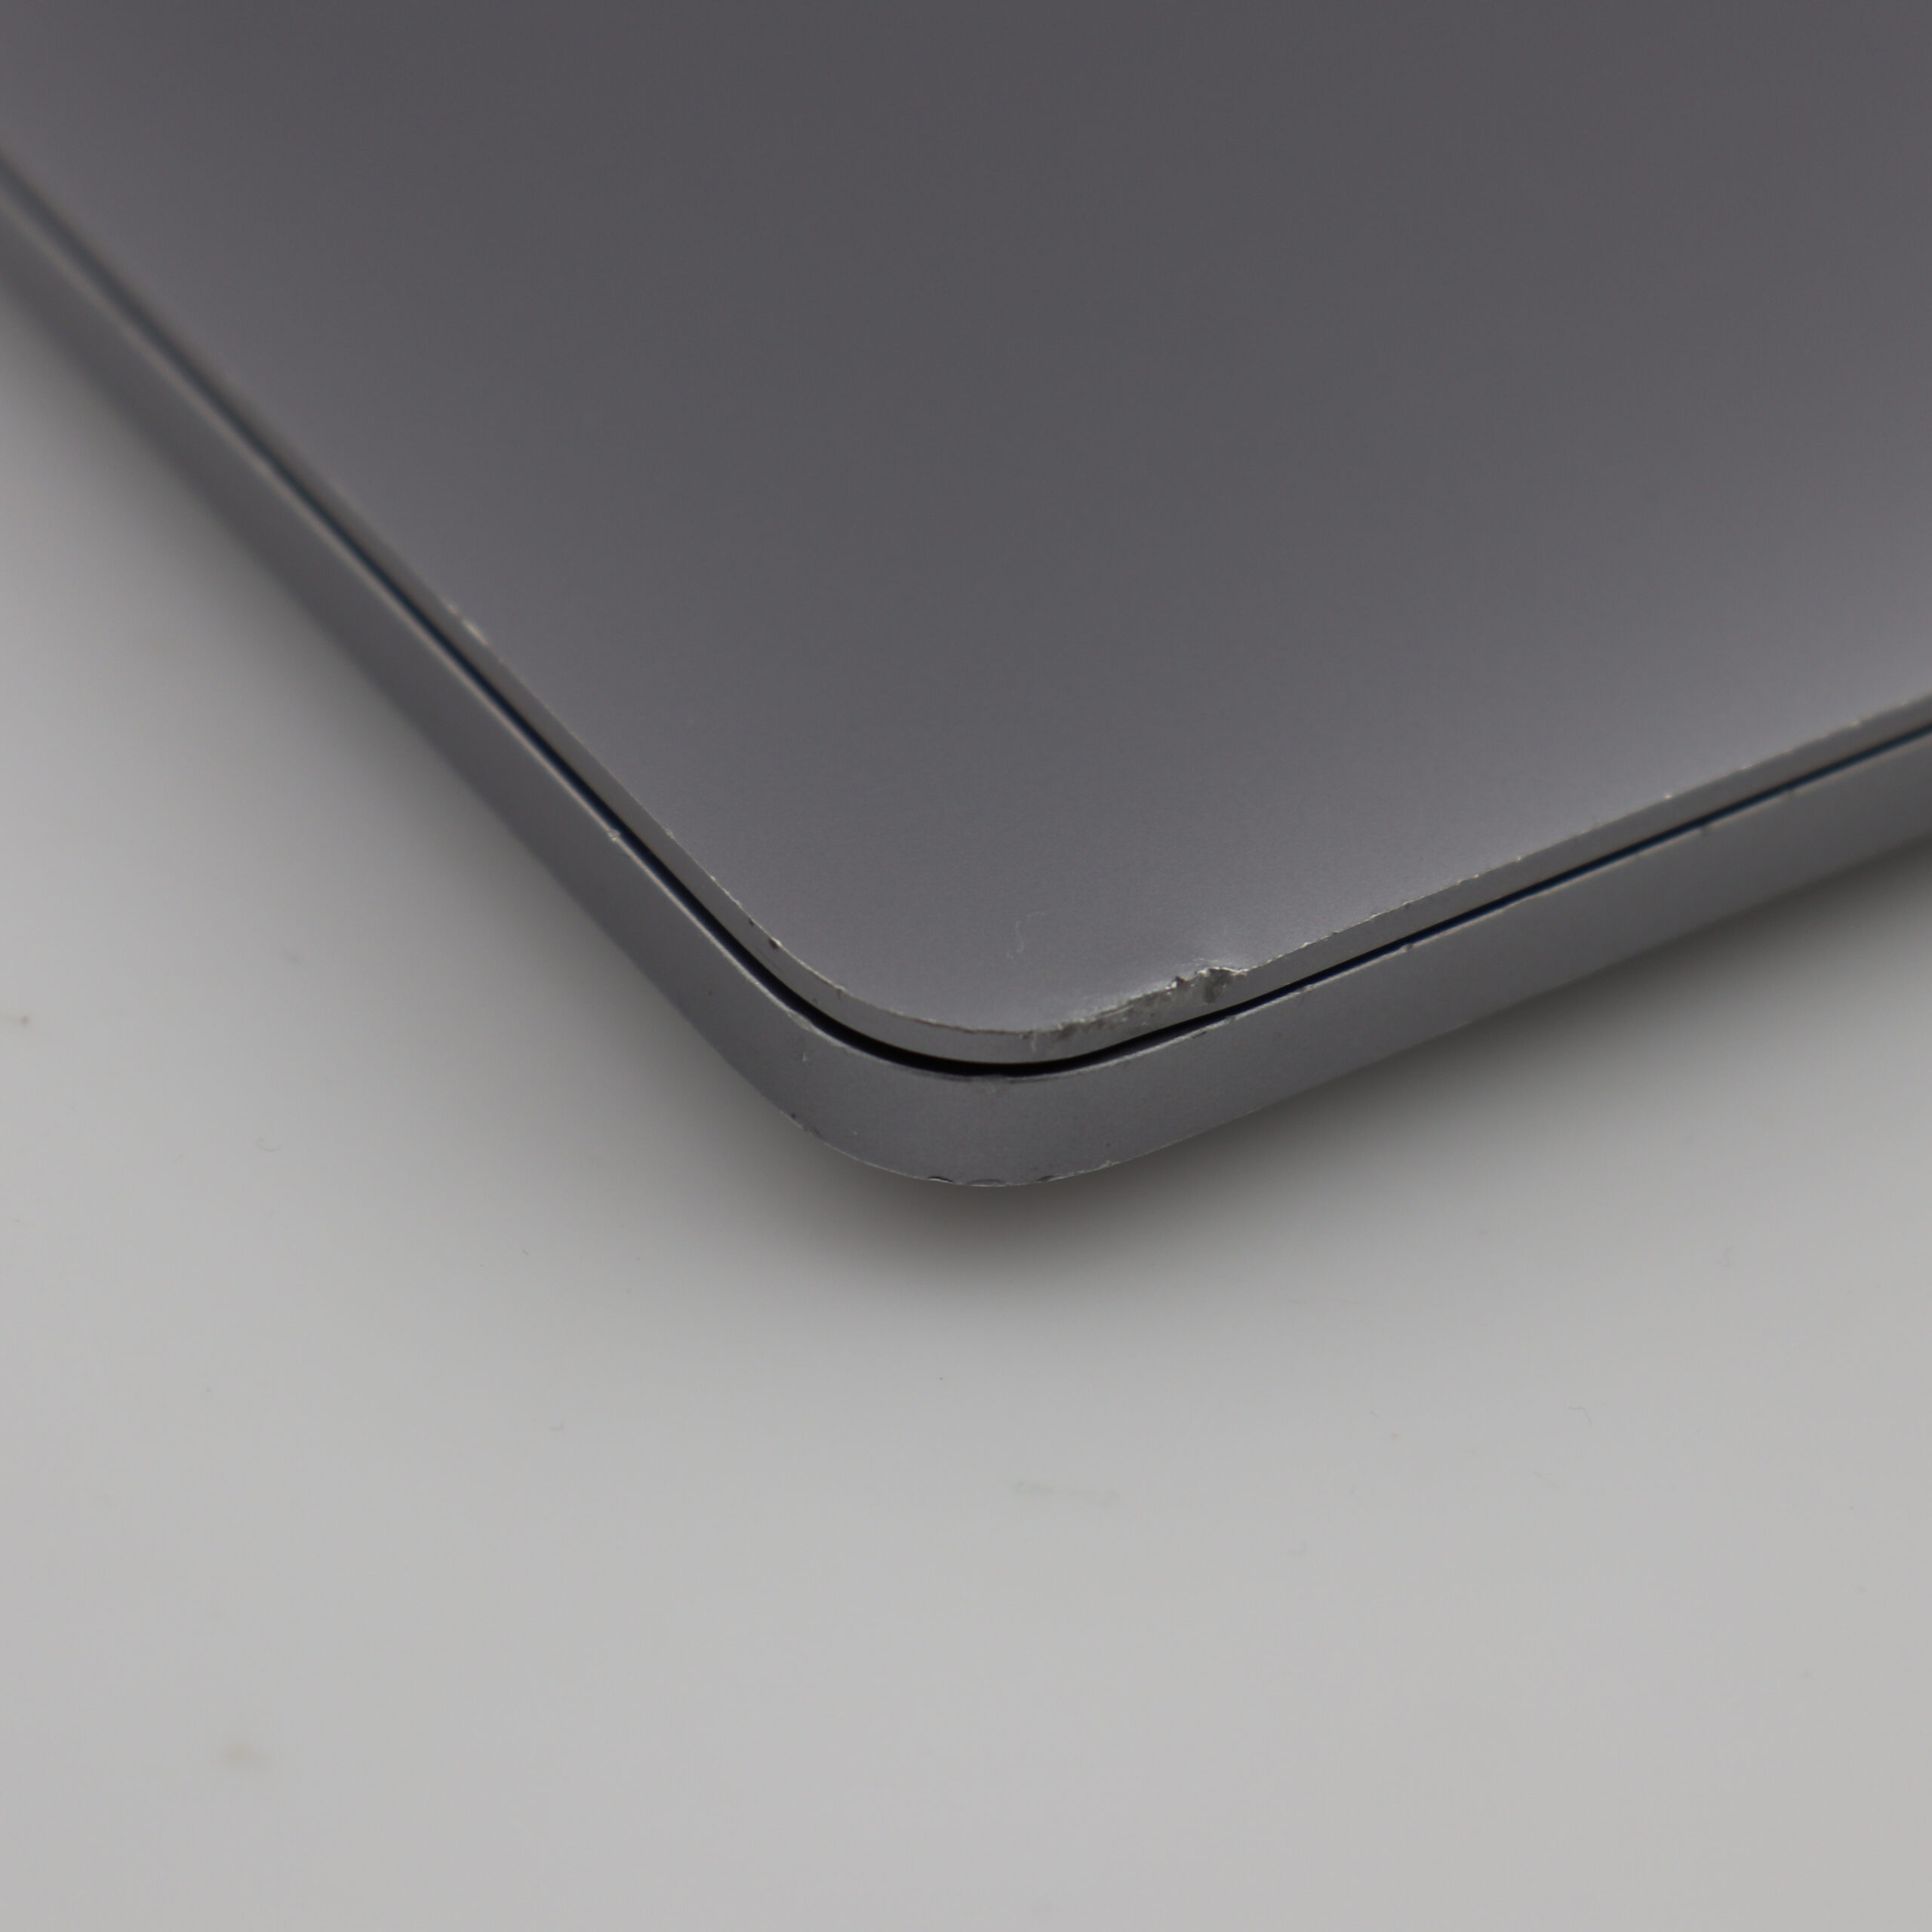 MacBook Pro with worn edge